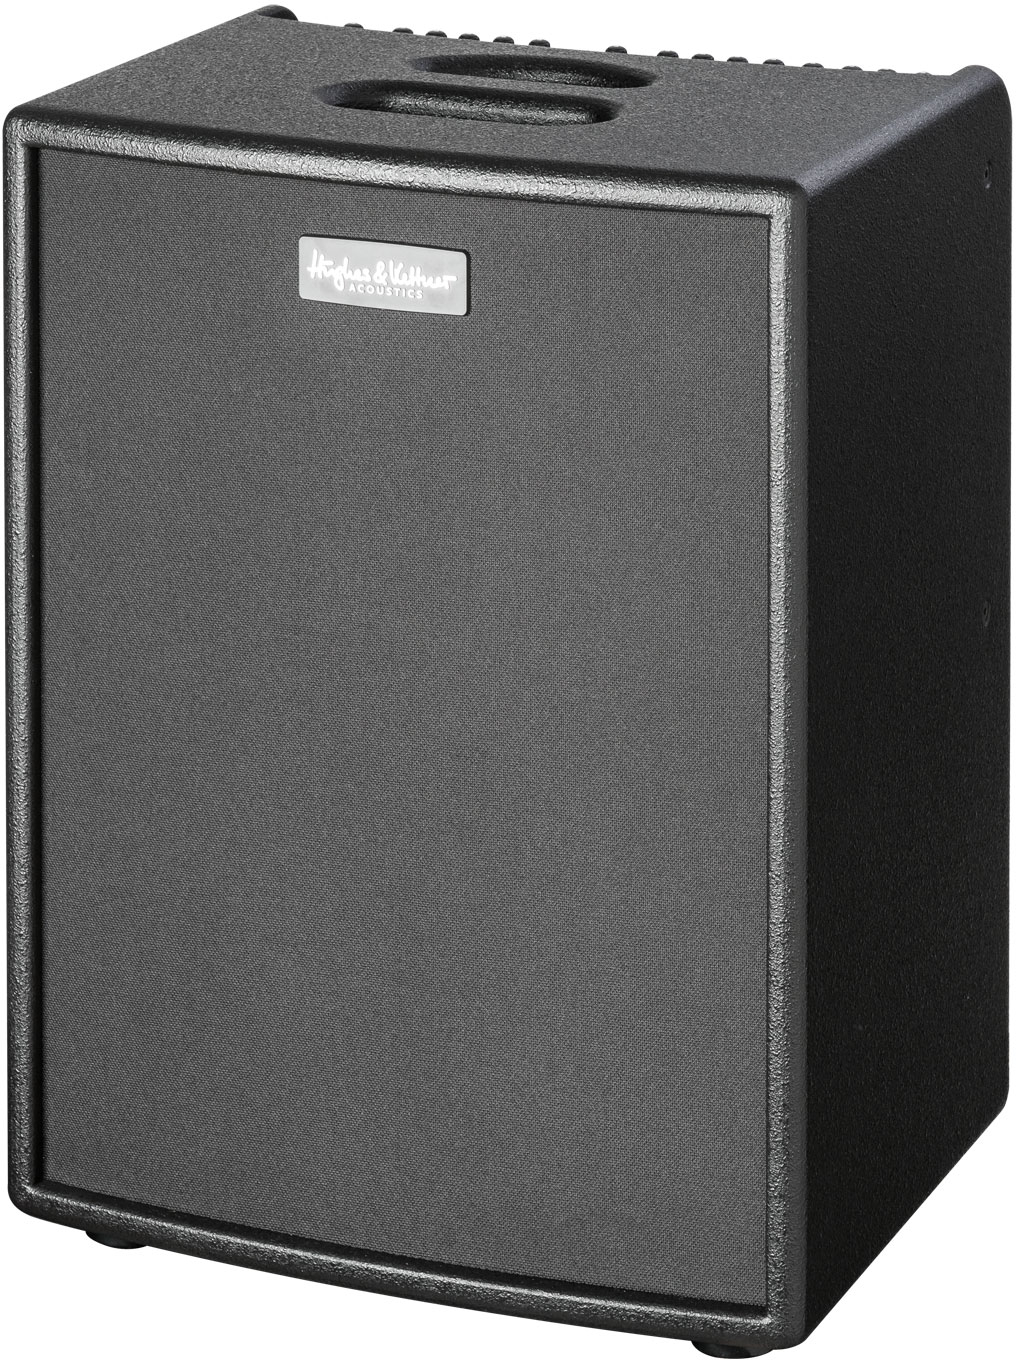 Hughes & Kettner Era 2 400w 2x8 Black - Combo amplificador acústico - Variation 1